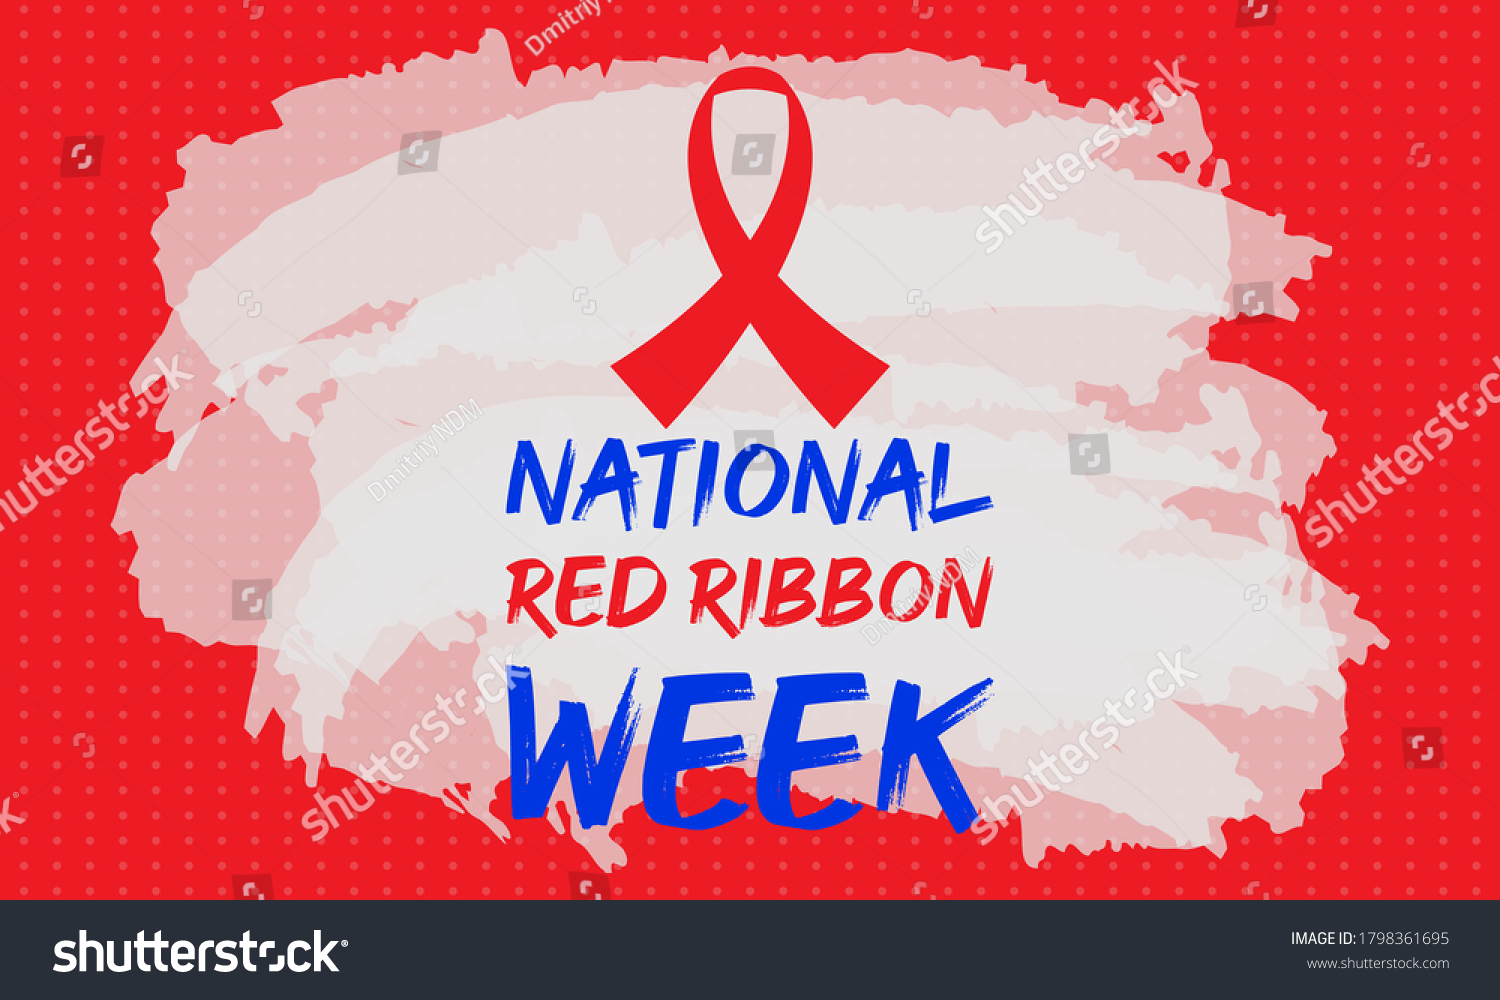 National Red Ribbon Week Takes Place เวกเตอร์สต็อก (ปลอดค่าลิขสิทธิ์